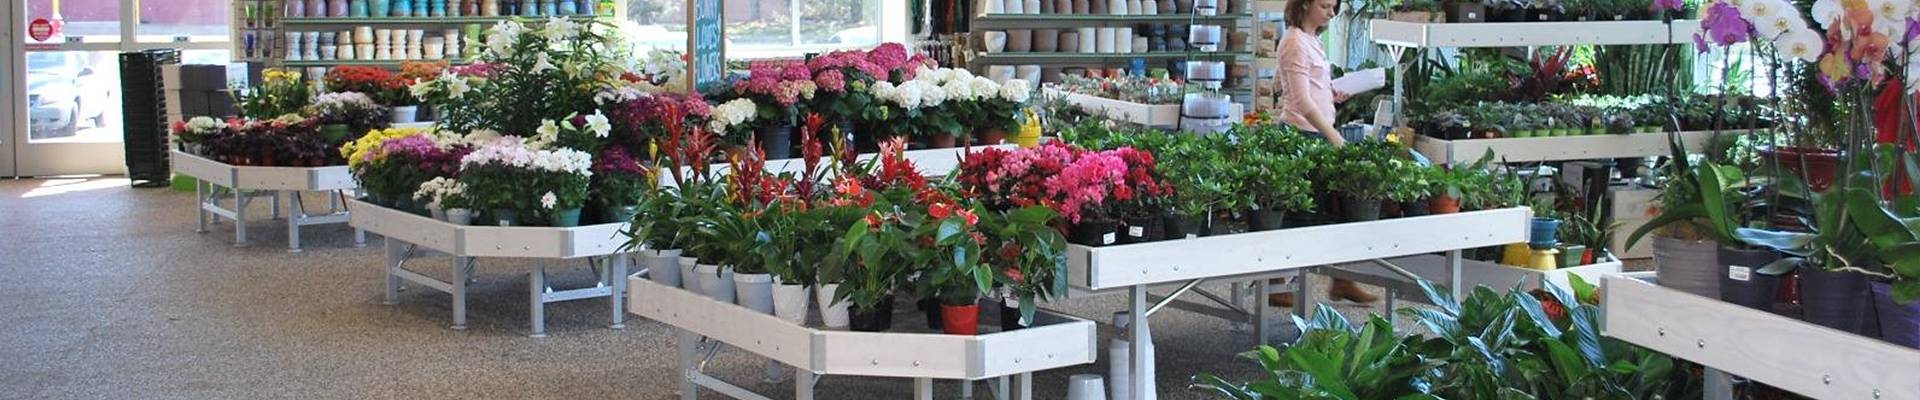 Renew the decor of your florist's shop